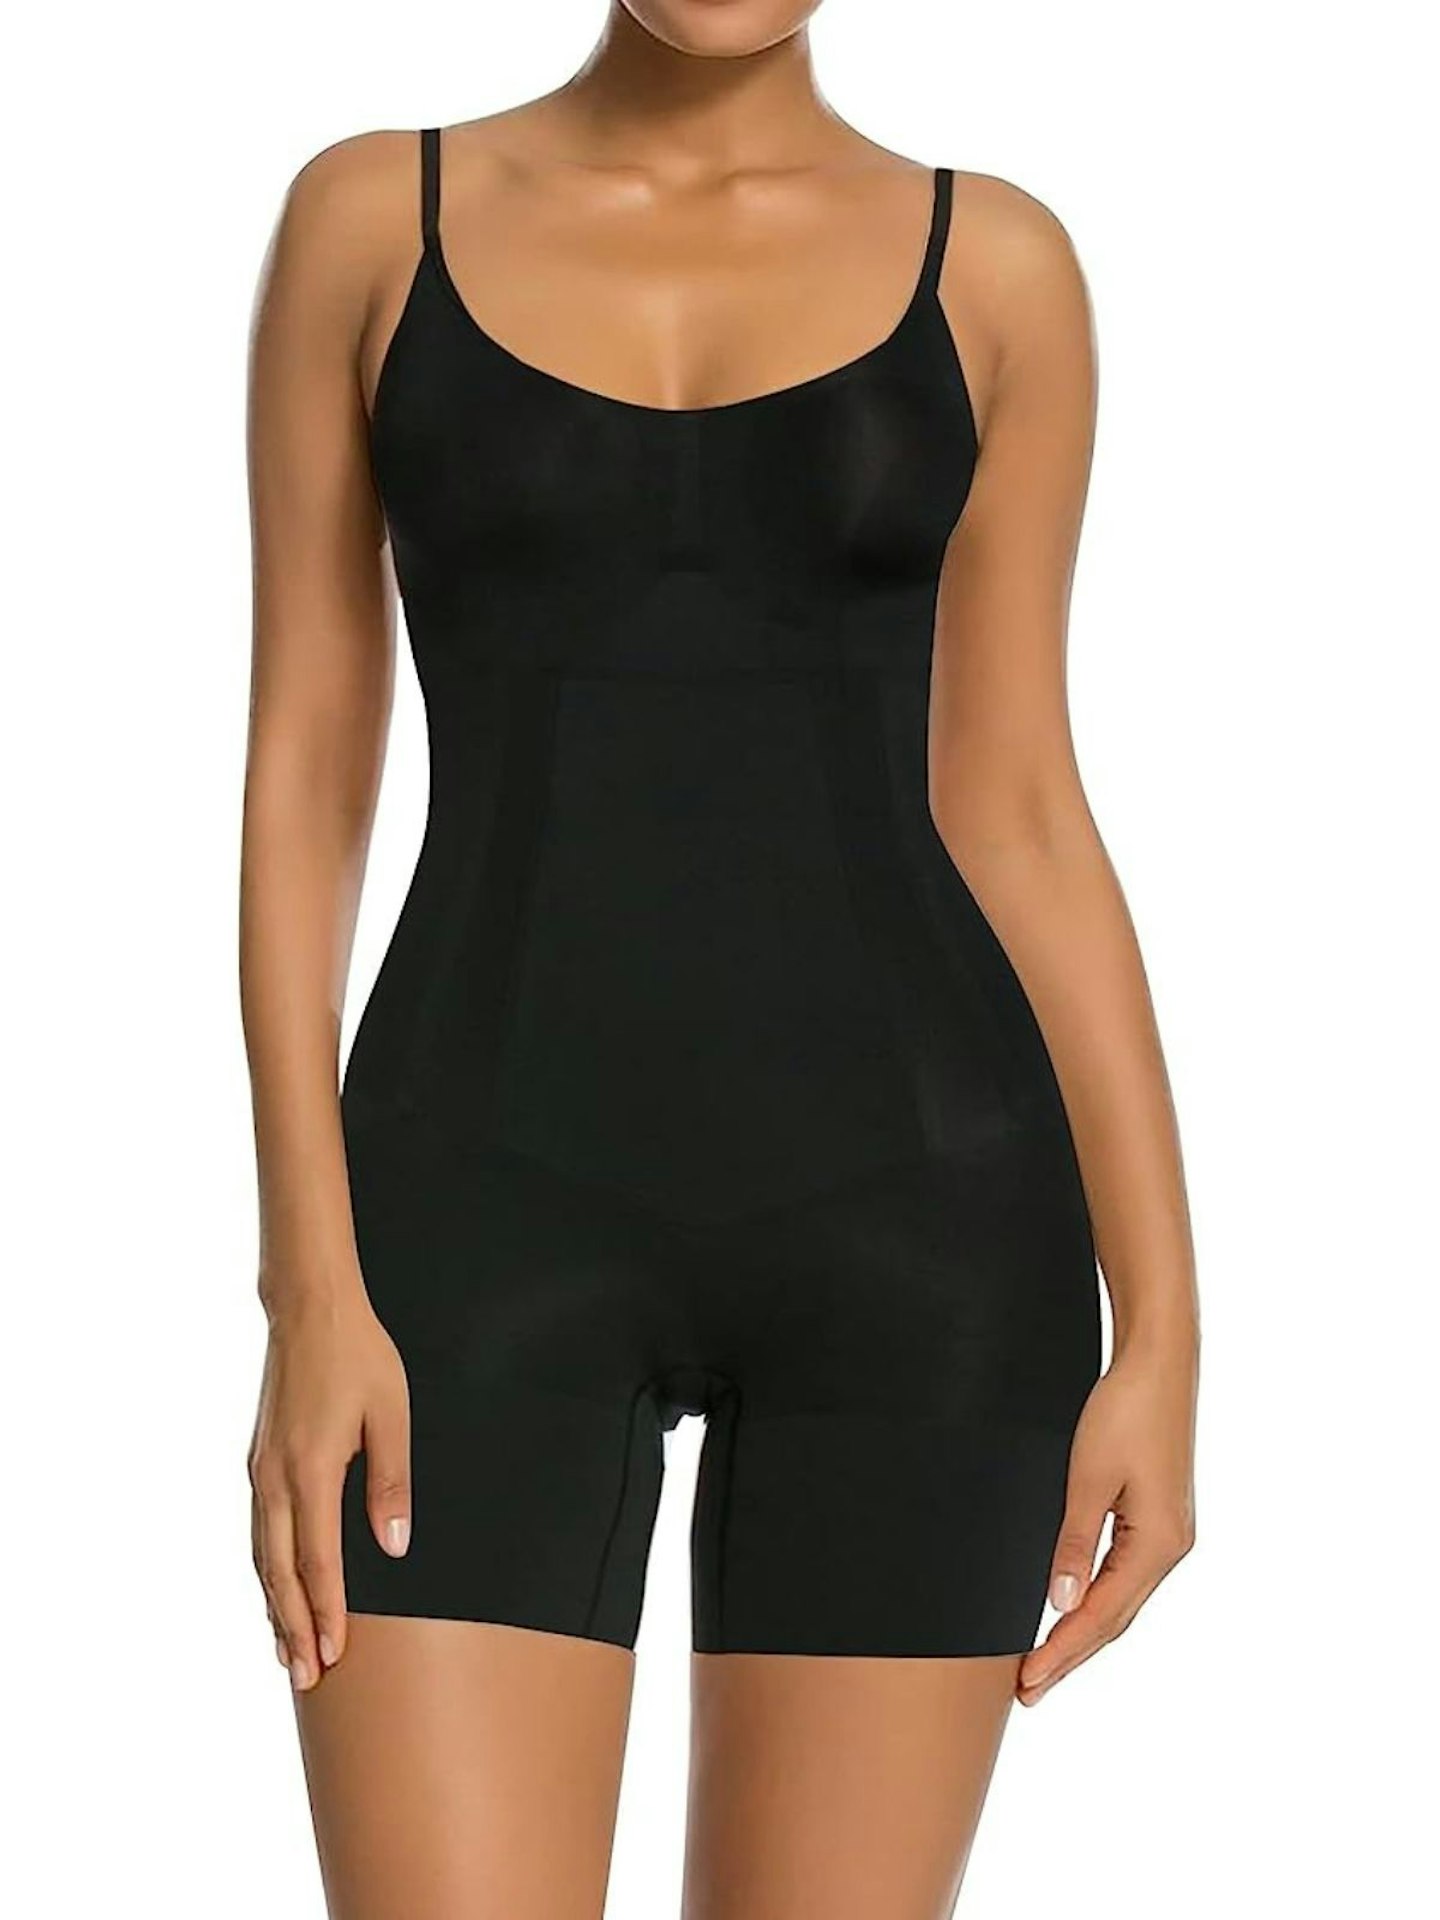 SHAPERX Bodysuit for Women Full Body Shaper in Black